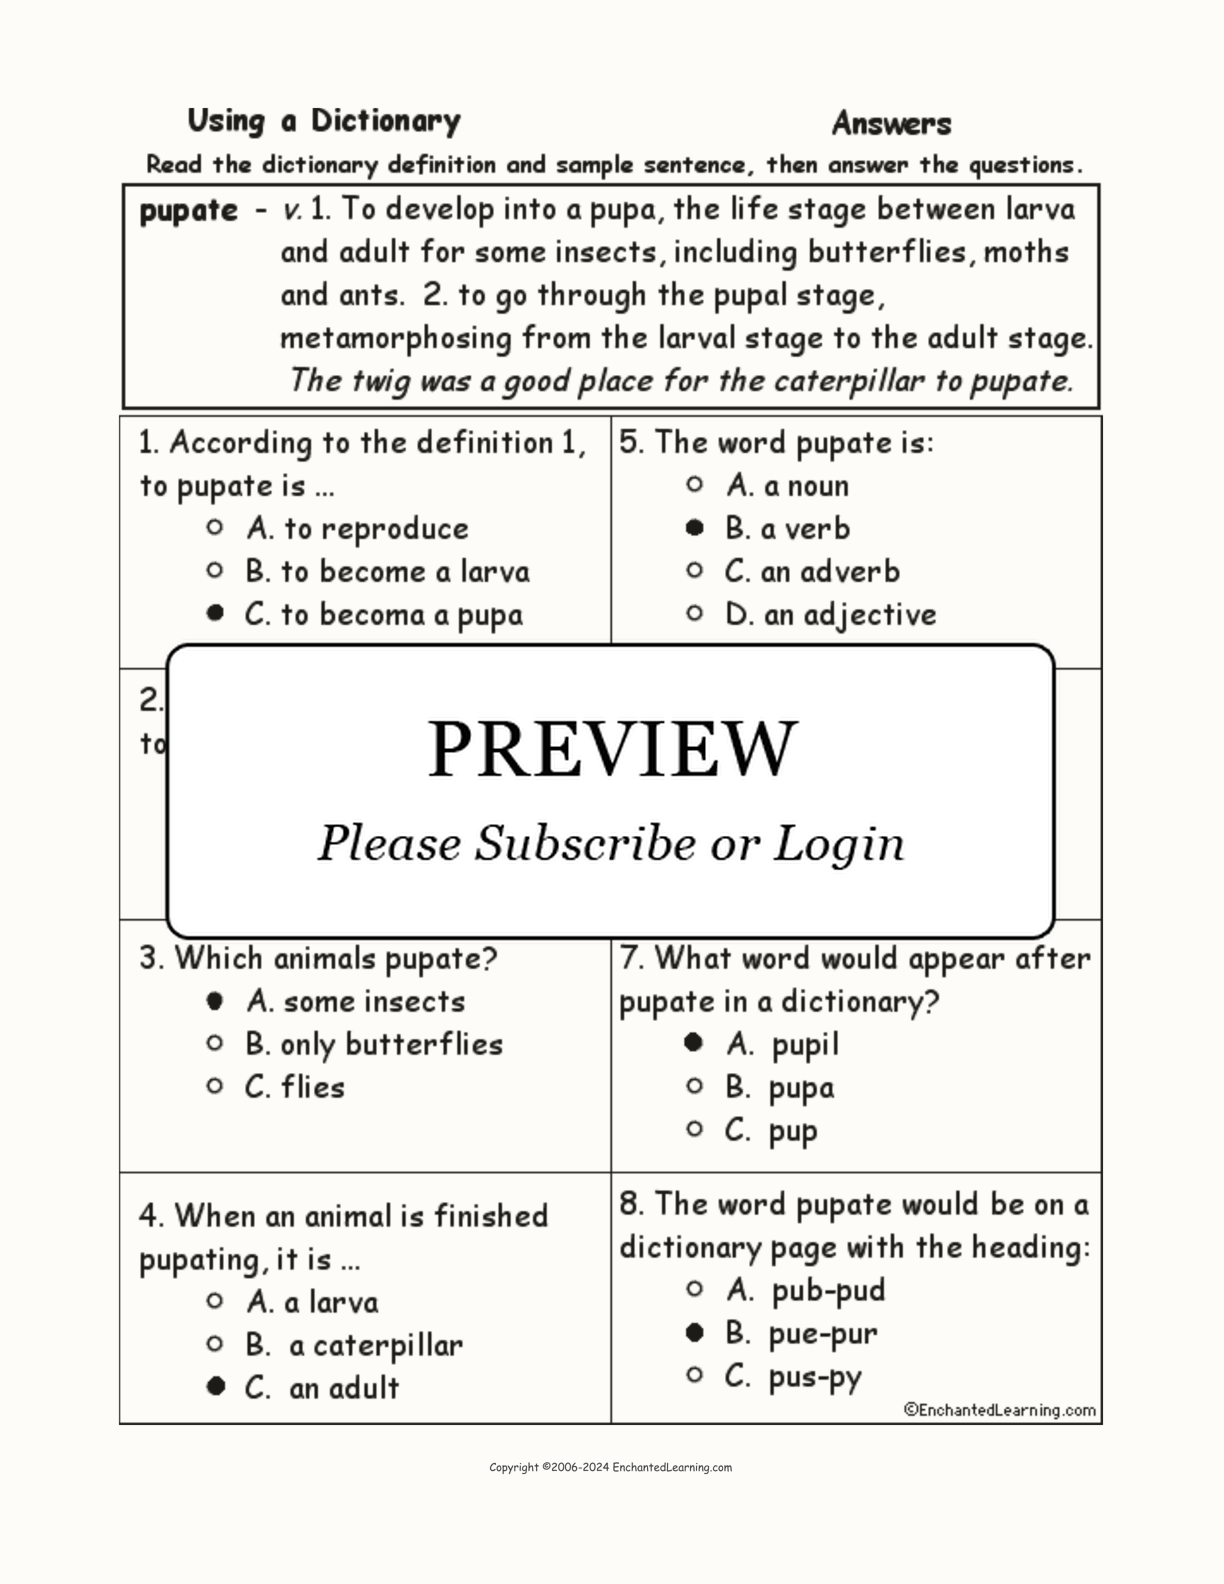 Pupate Definition Quiz interactive worksheet page 2